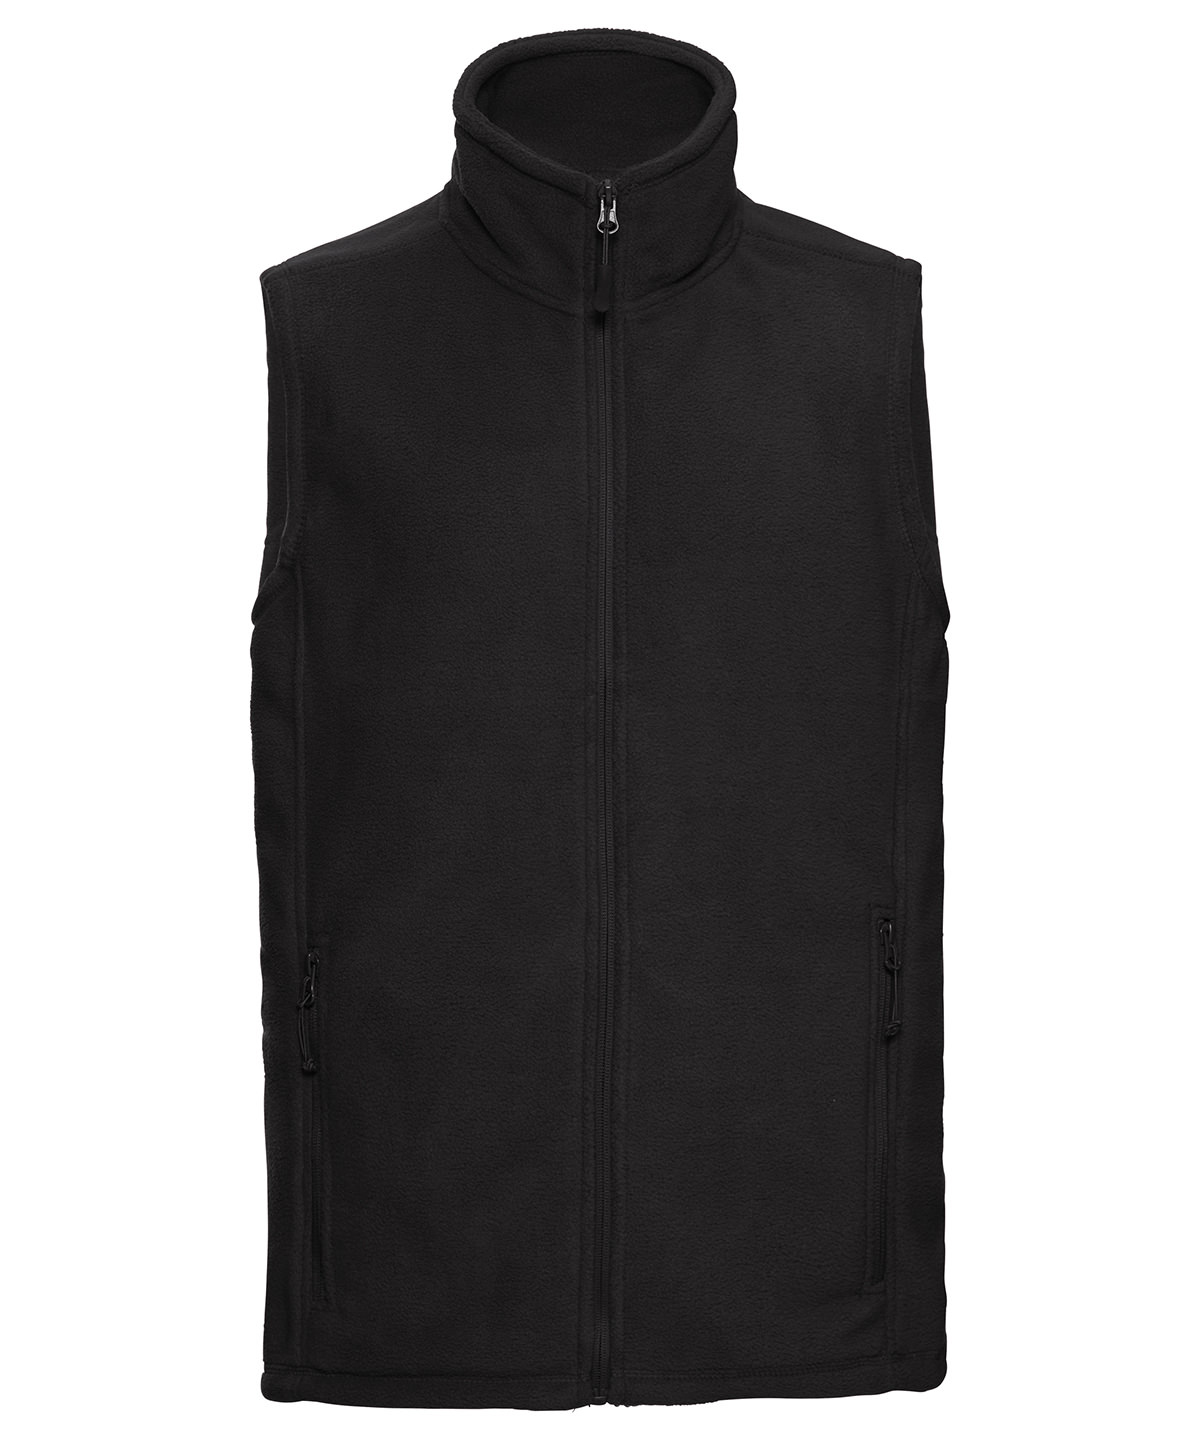 Outdoor Fleece Gilet Black Size 2XLarge